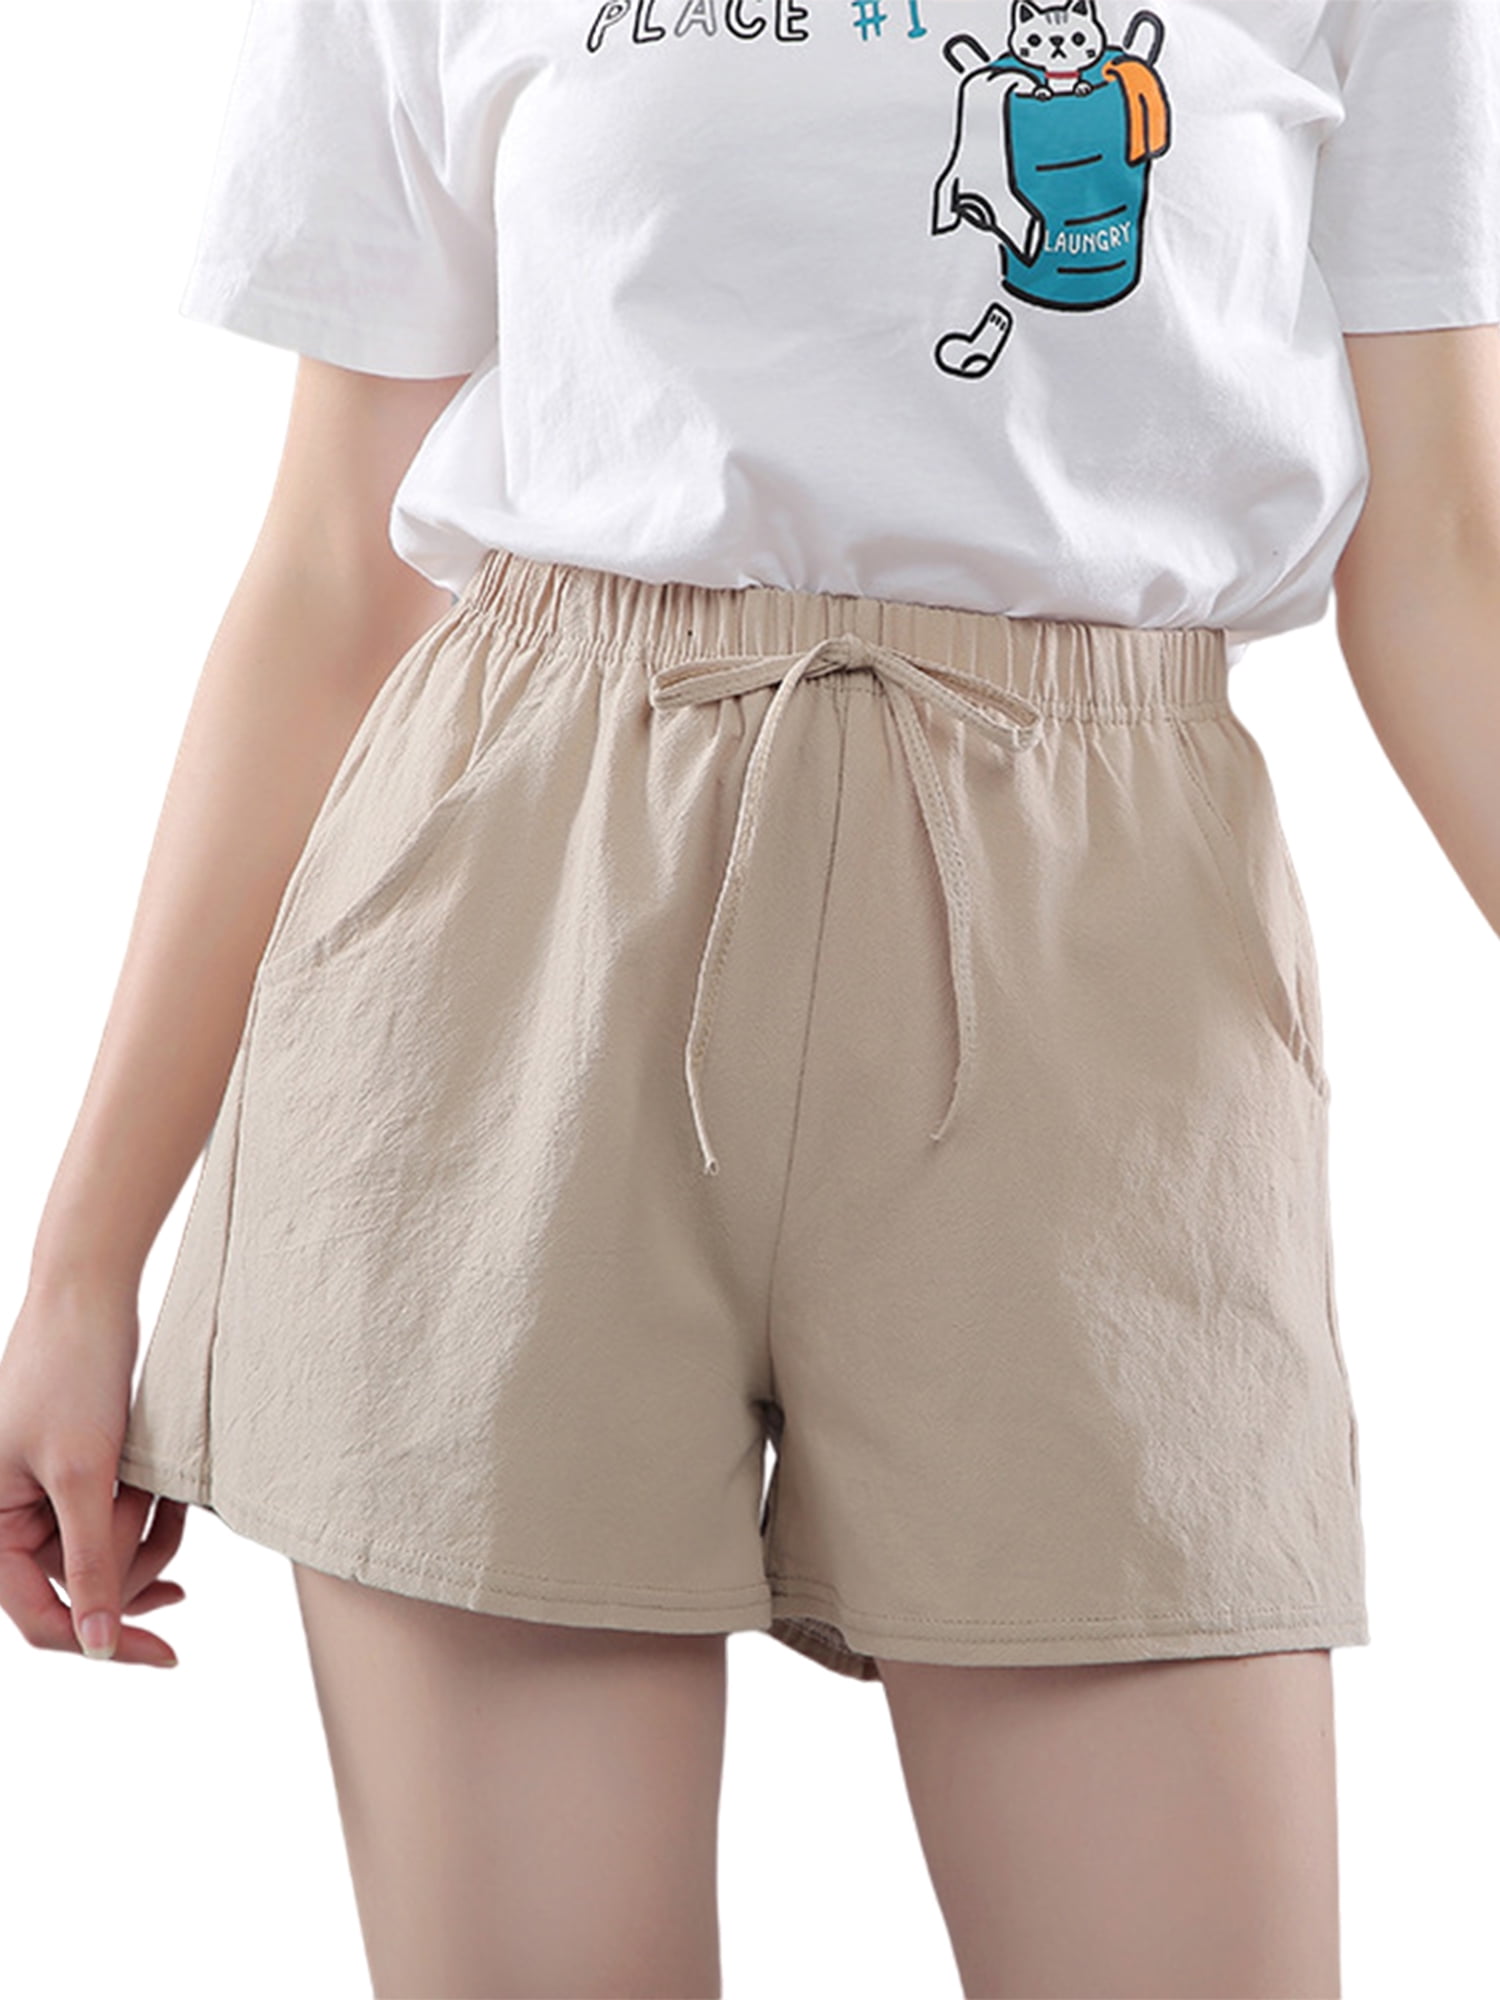 Aiybao Womens Casual Shorts Summer Drawstring Elastic Waist Comfy Short with Pockets